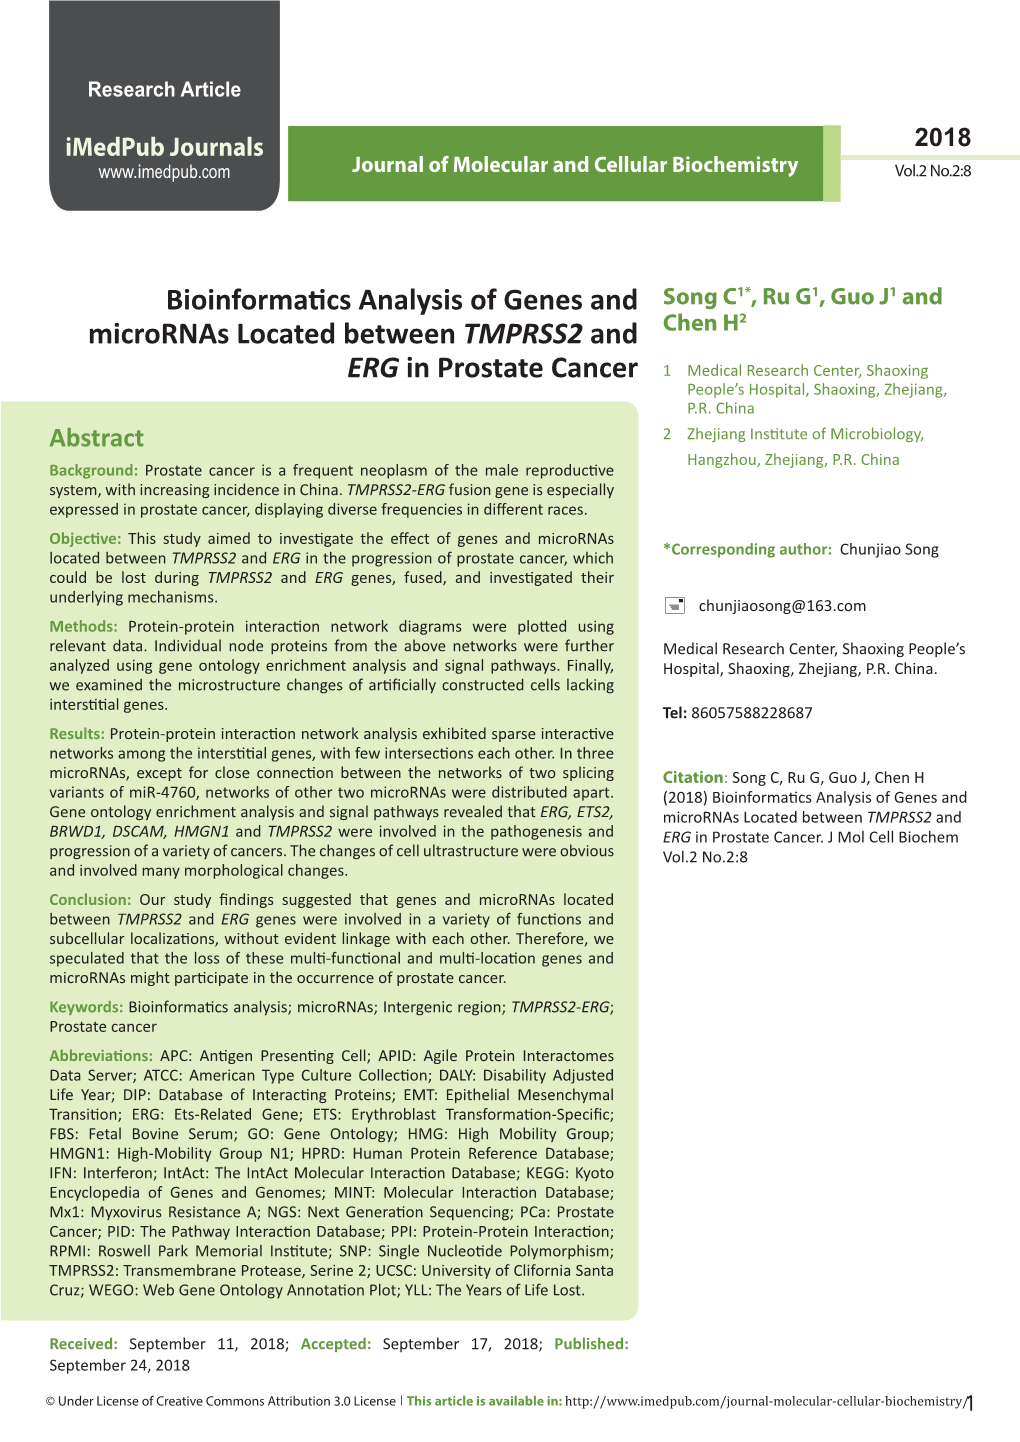 Cbioinformatics Analysis of Genes and Micrornas Located Between